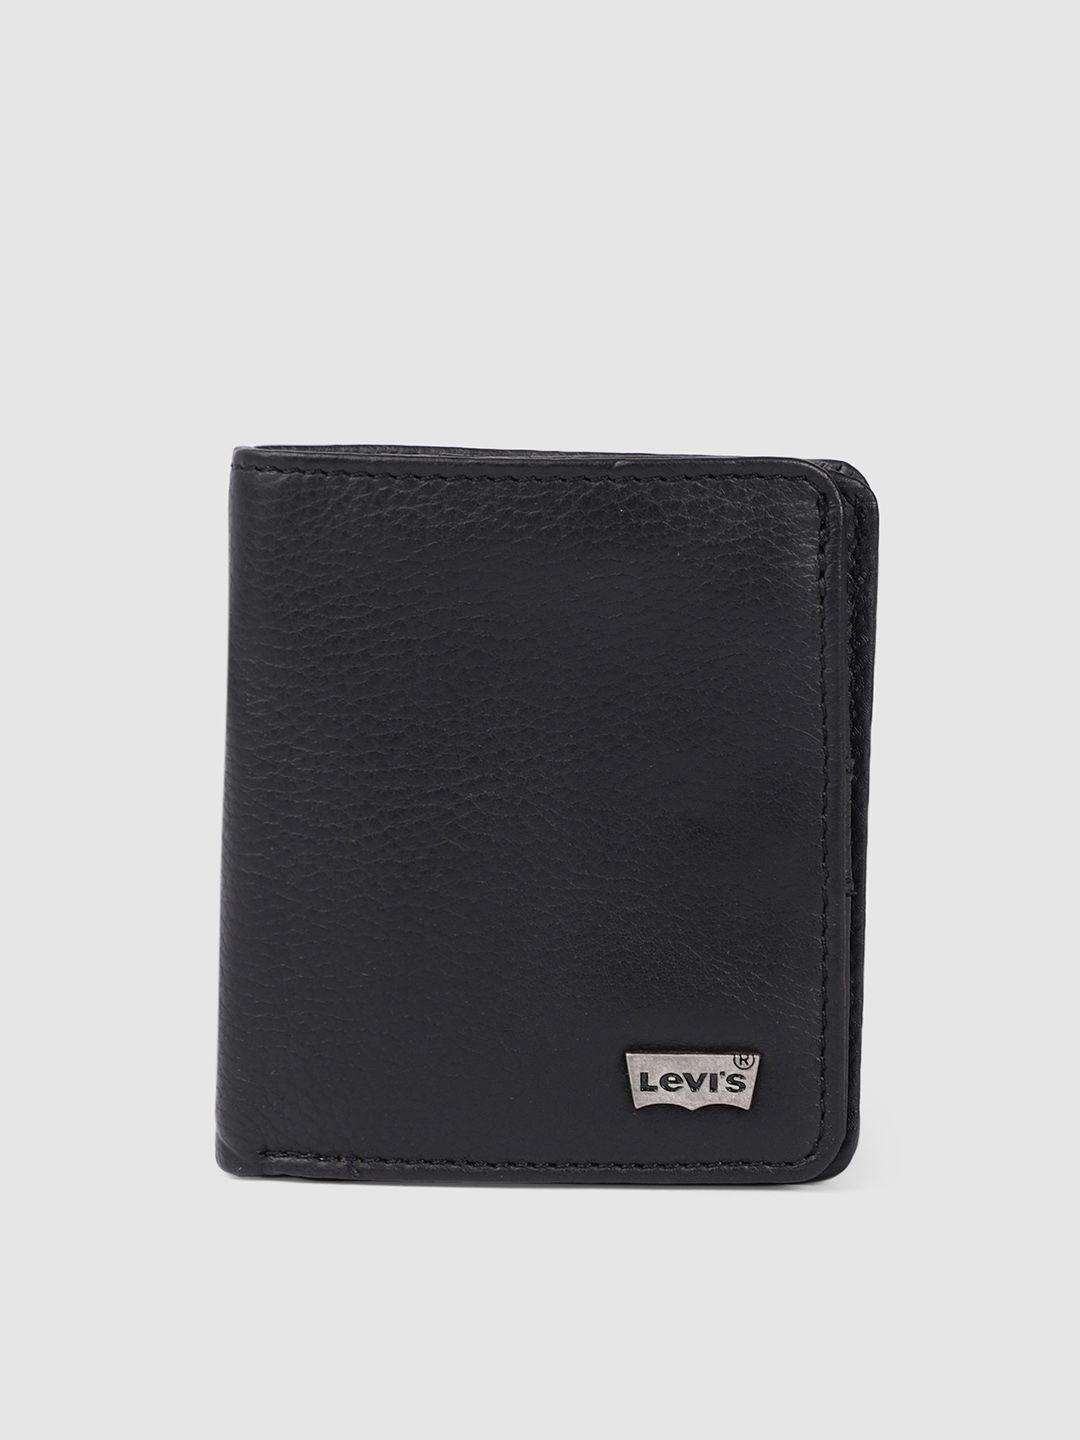 levis-men-black-leather-two-fold-wallet